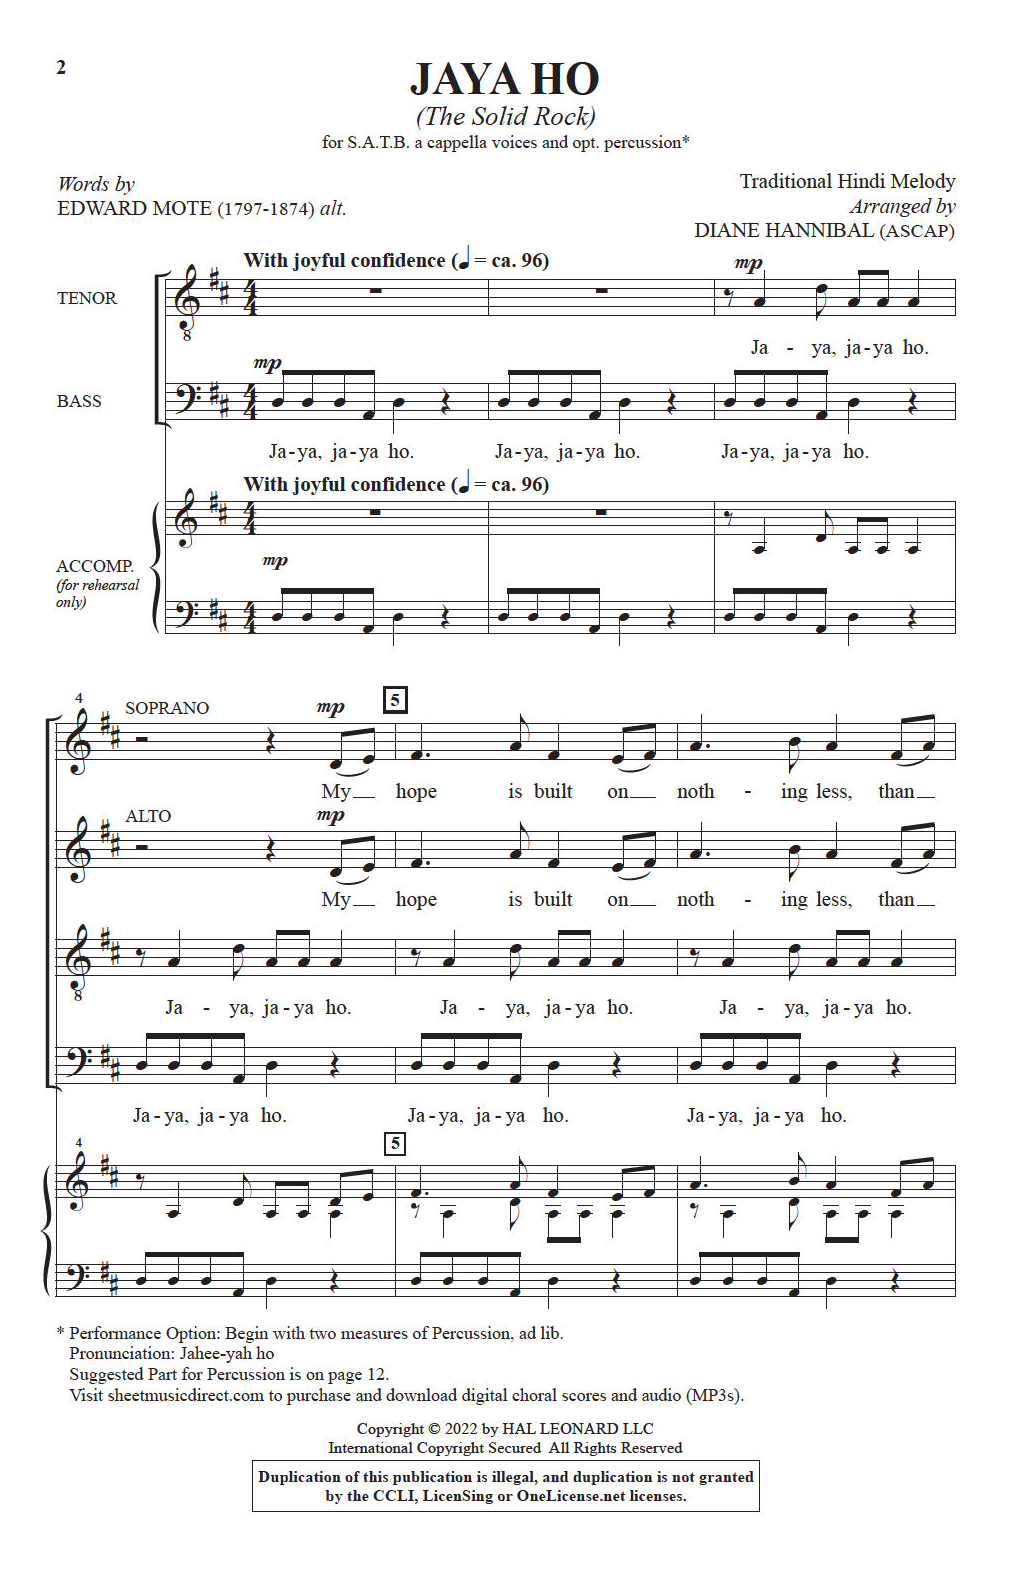 Edward Mote Jaya Ho (The Solid Rock) (arr. Diane Hannibal) Sheet Music Notes & Chords for SATB Choir - Download or Print PDF